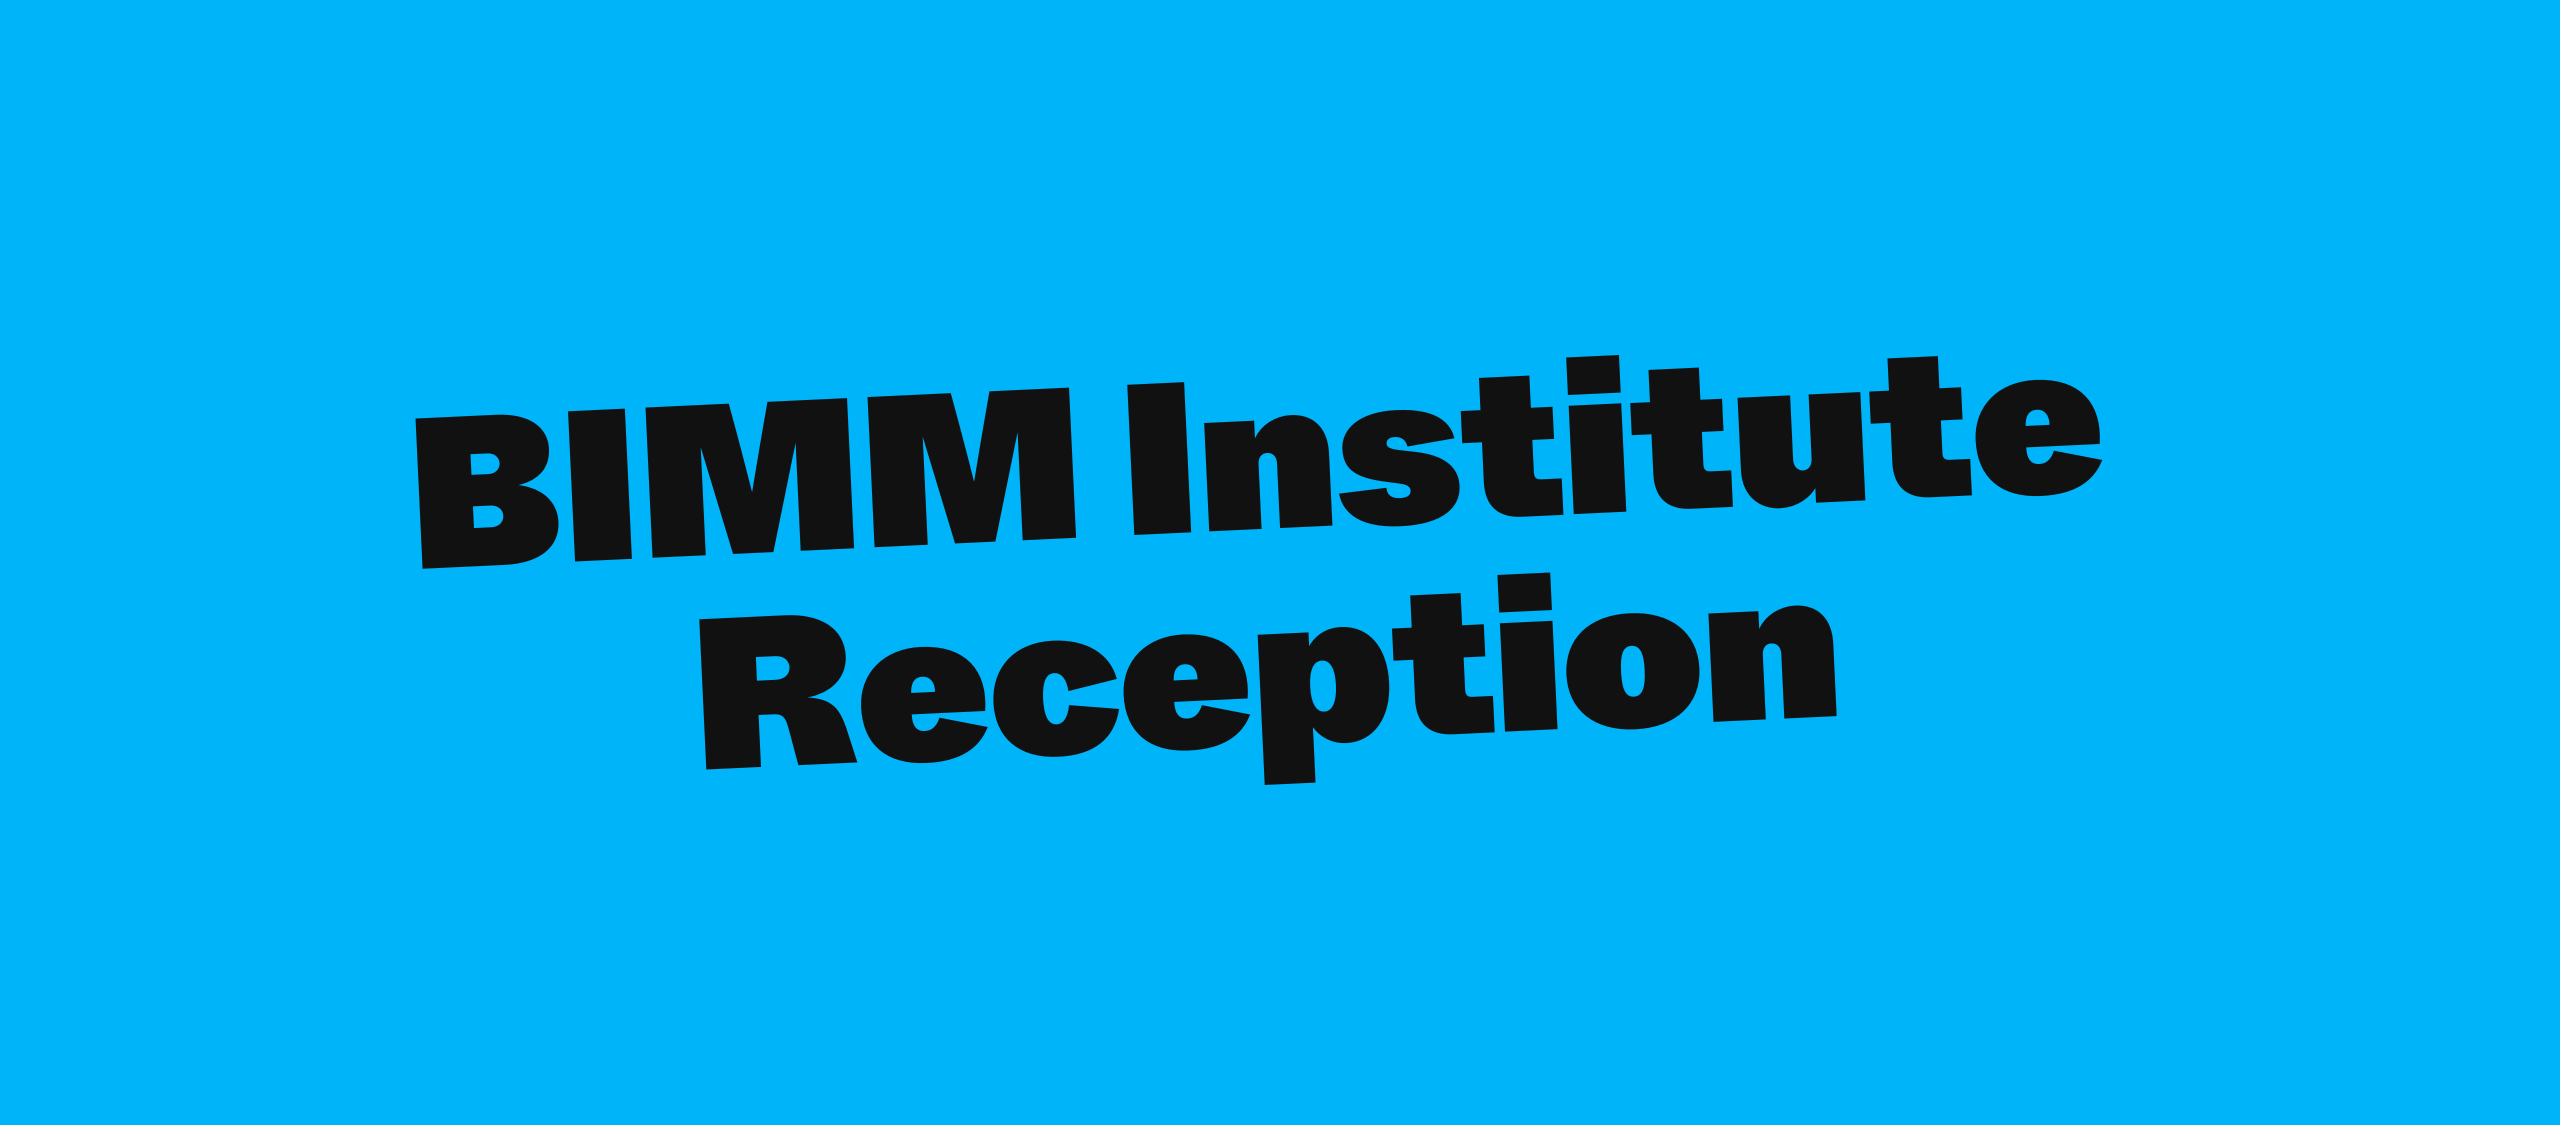 BIMM Institute Reception